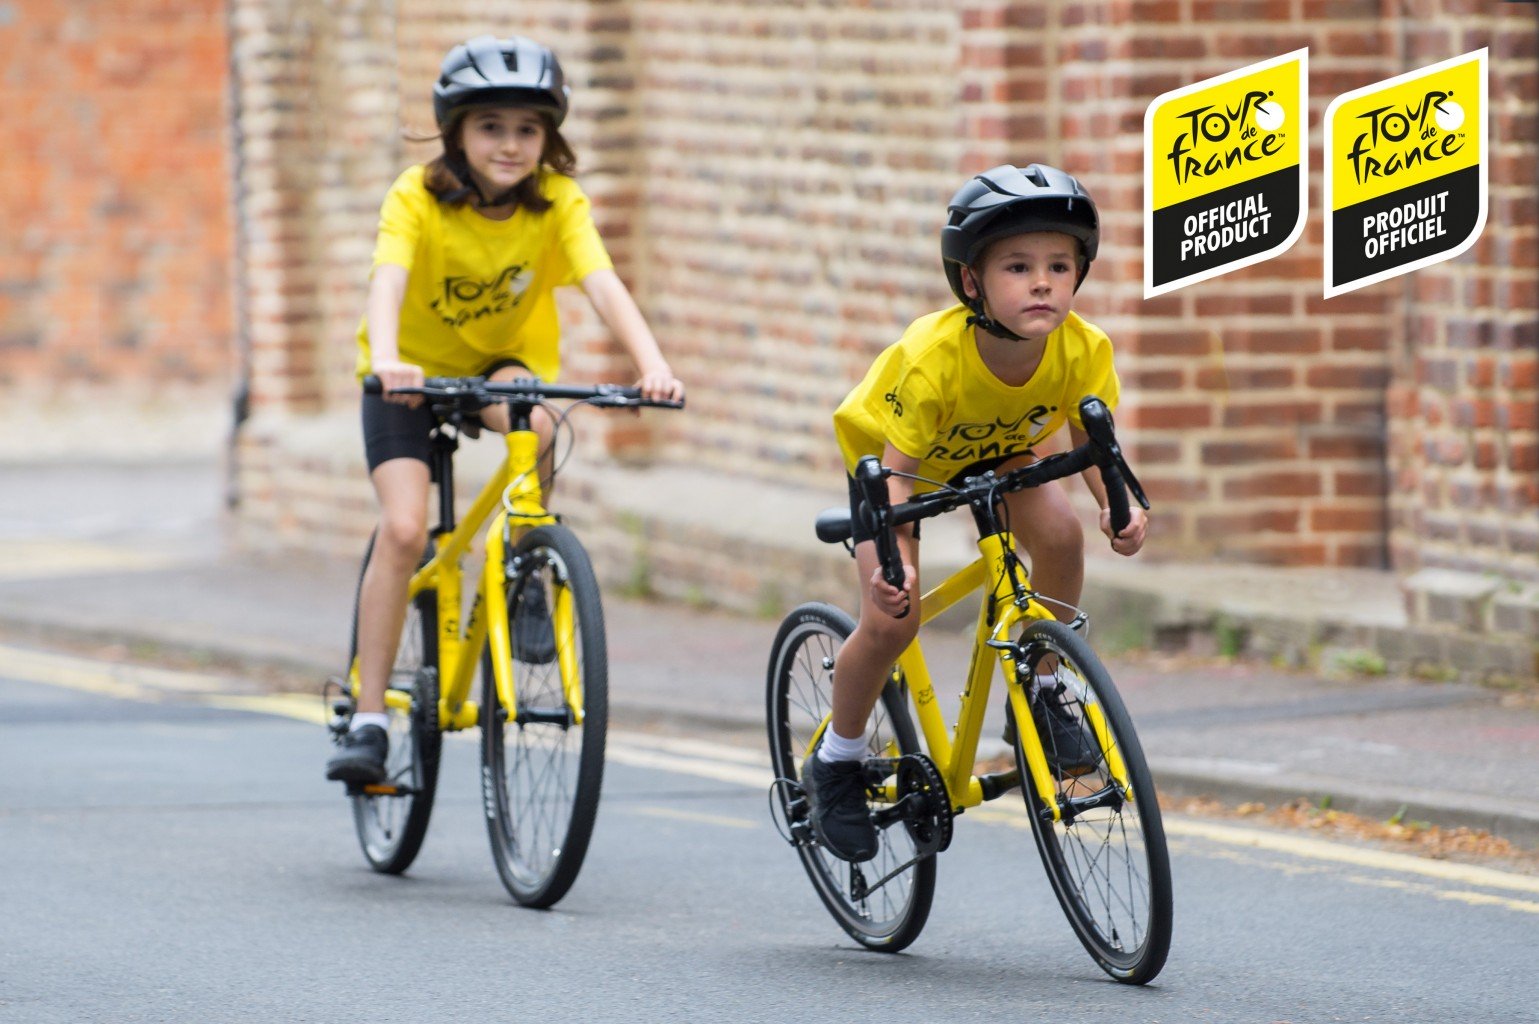 kids-cycling-on-road.jpg